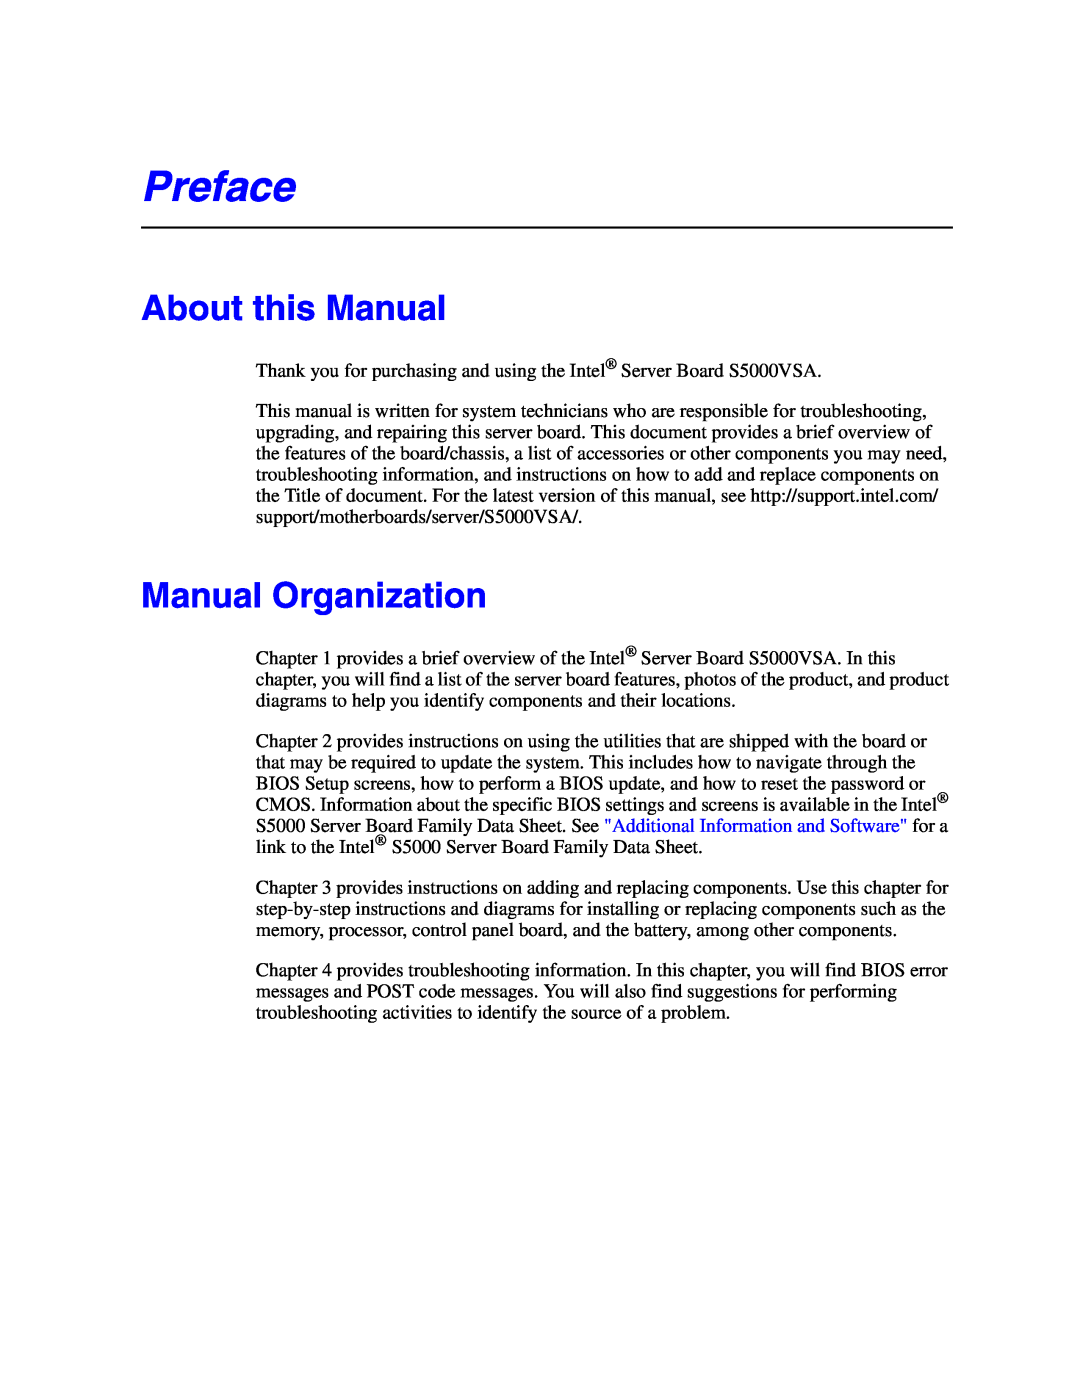 Intel S5000VSA manual Preface, About this Manual, Manual Organization 